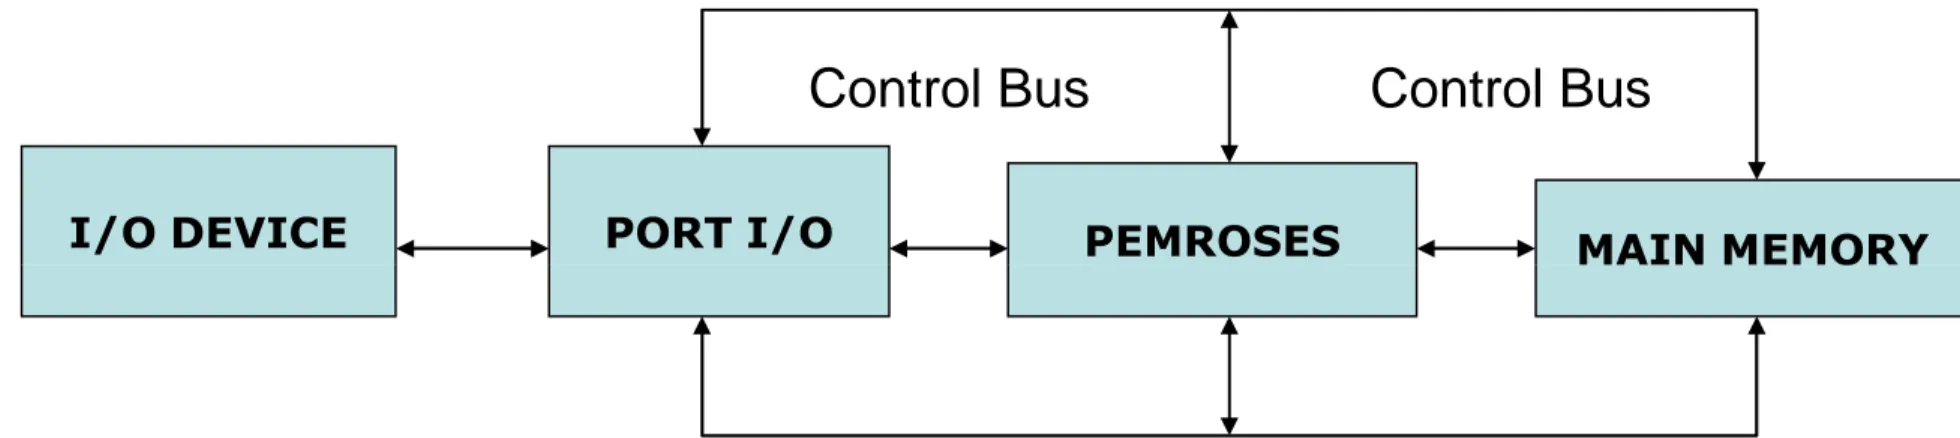 Figure 1. COMPUTER SYSTEM